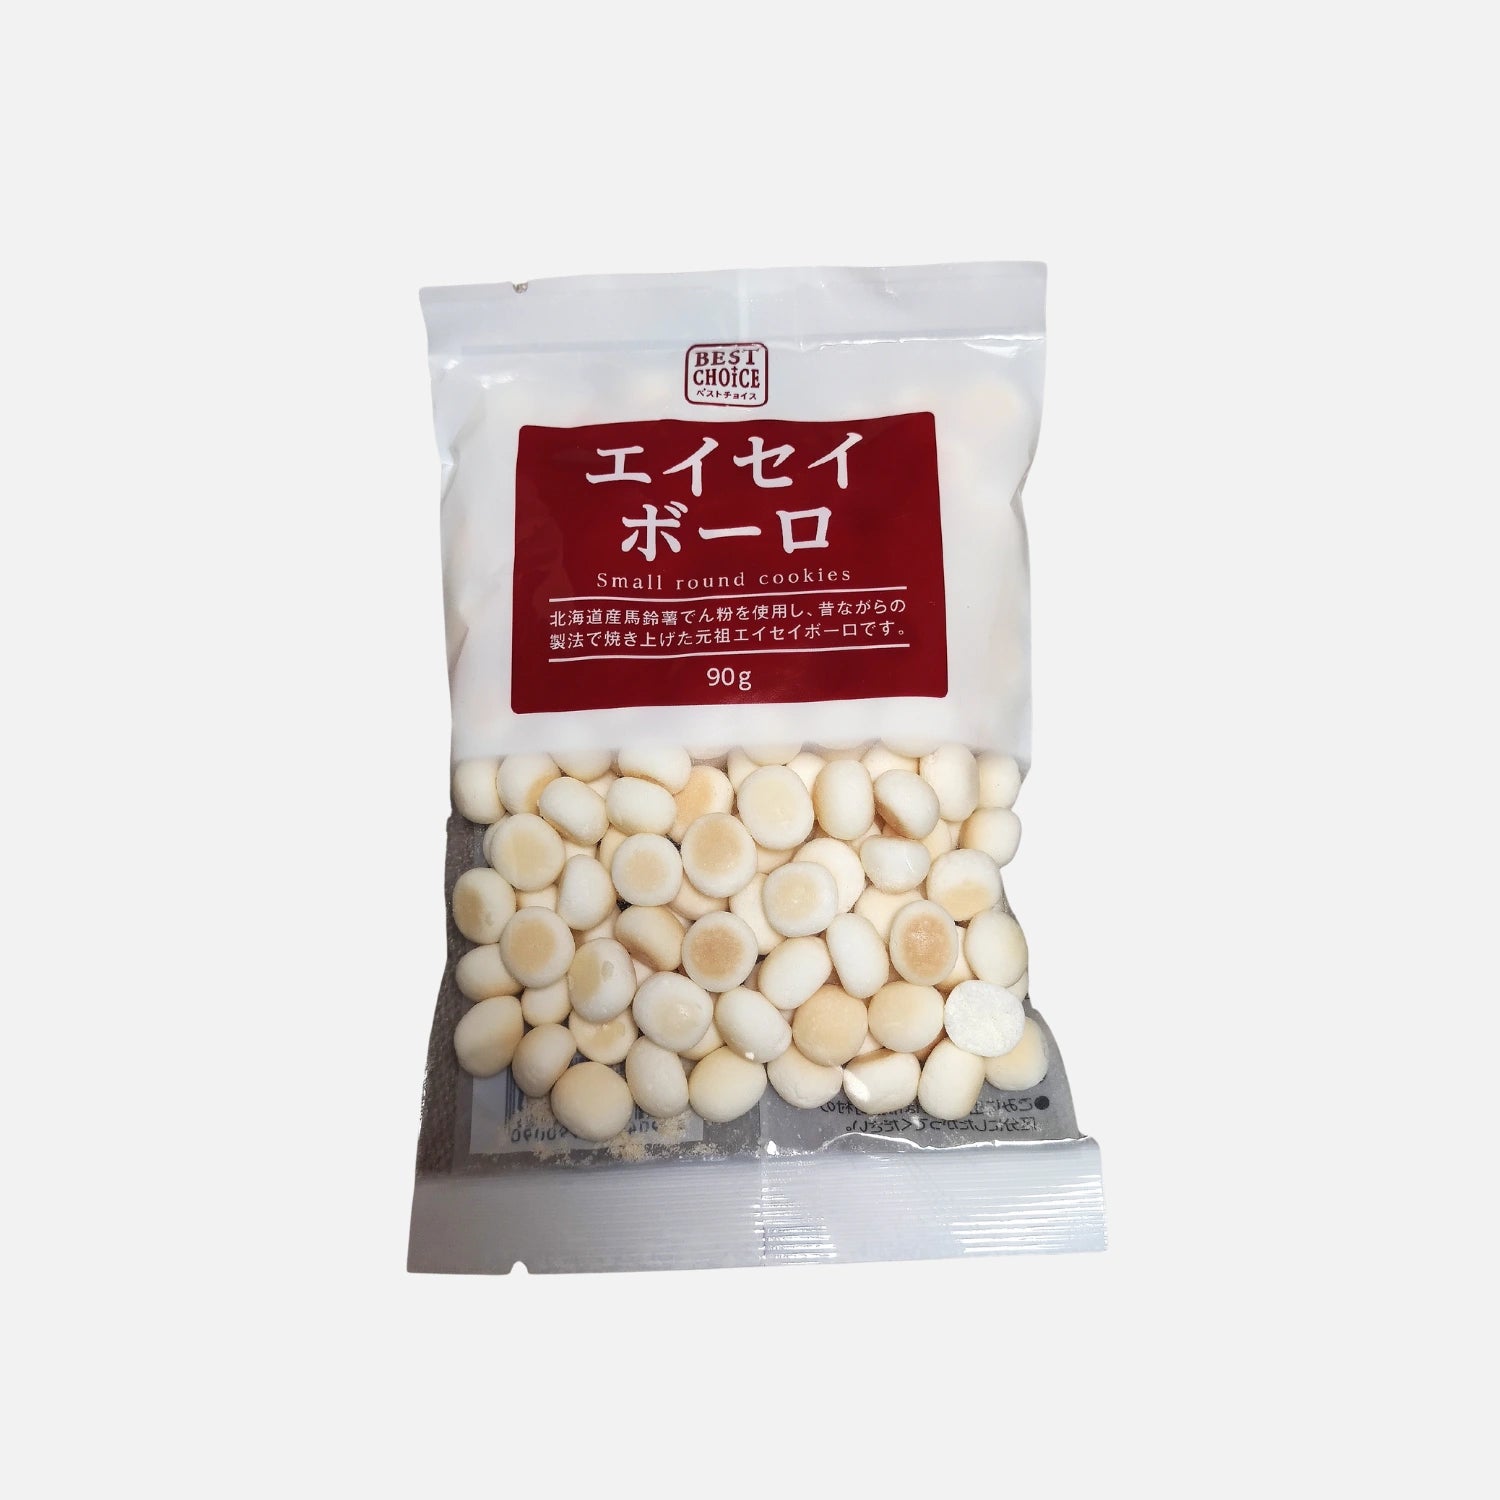 Best Choice Eisei Boro Small Round Cookies 80g - Buy Me Japan